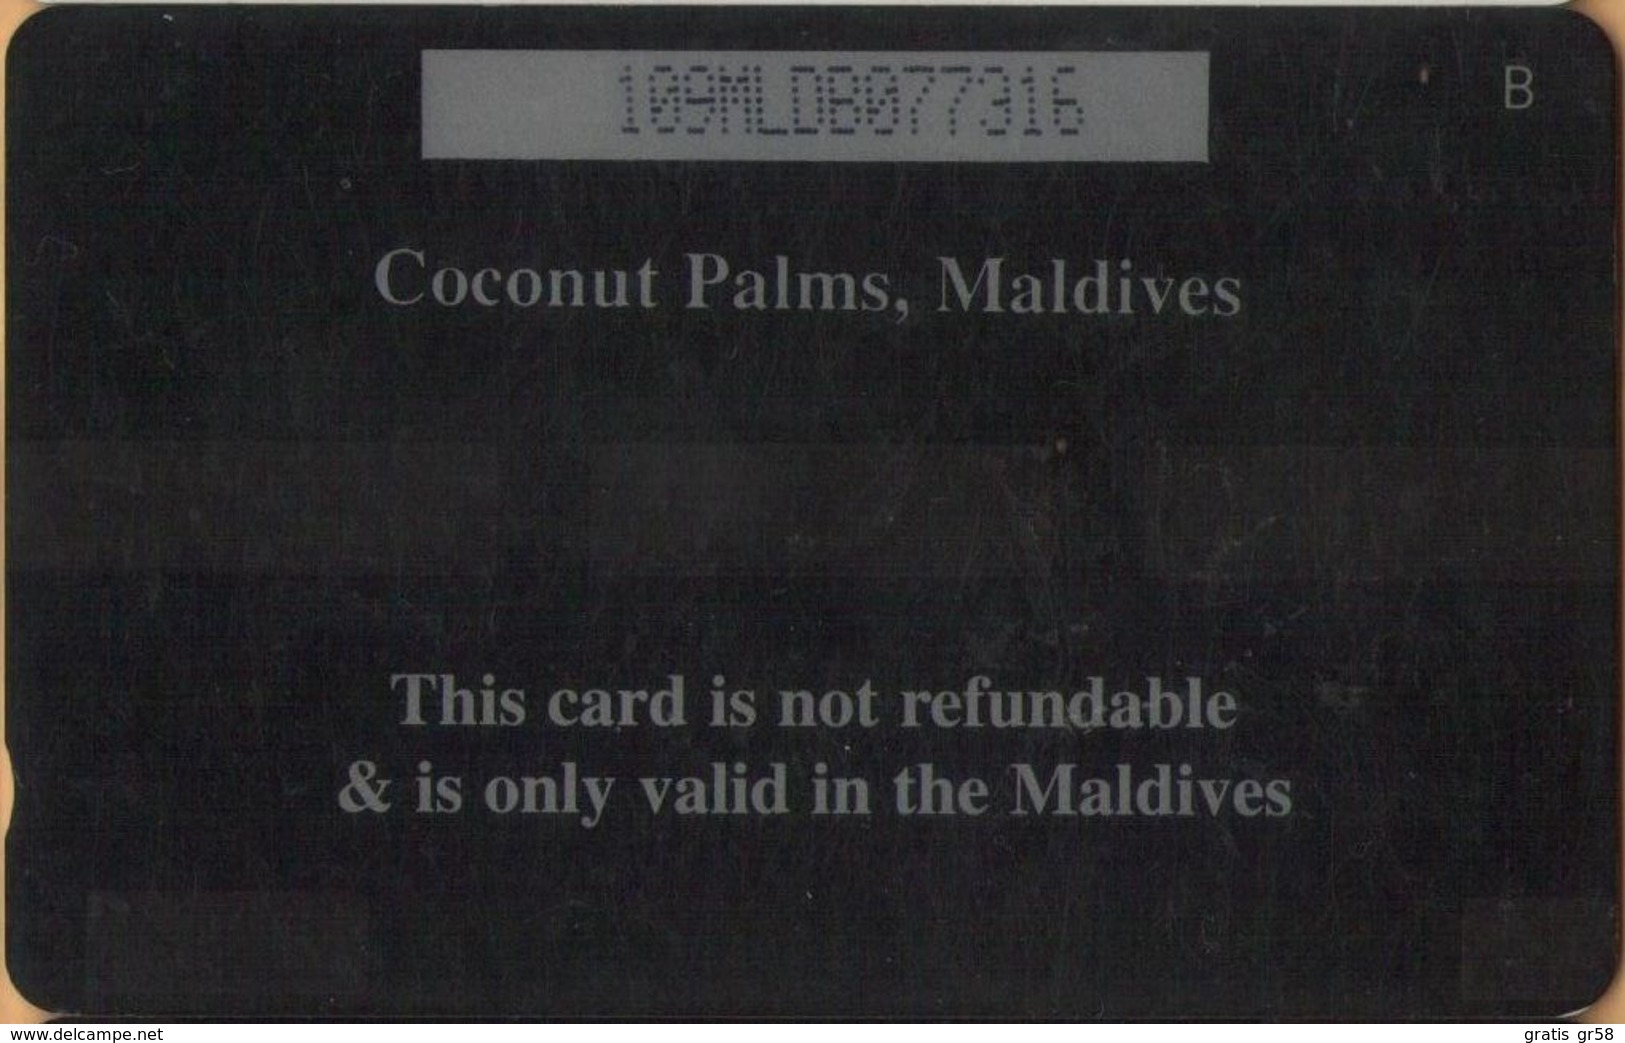 Maldives - MV: MAL-M-3A, GPT, Coconut Palms, Maldives, Beaches, 109MLDB, Dashed Zero: "Ø", 2000, Used - Maldives